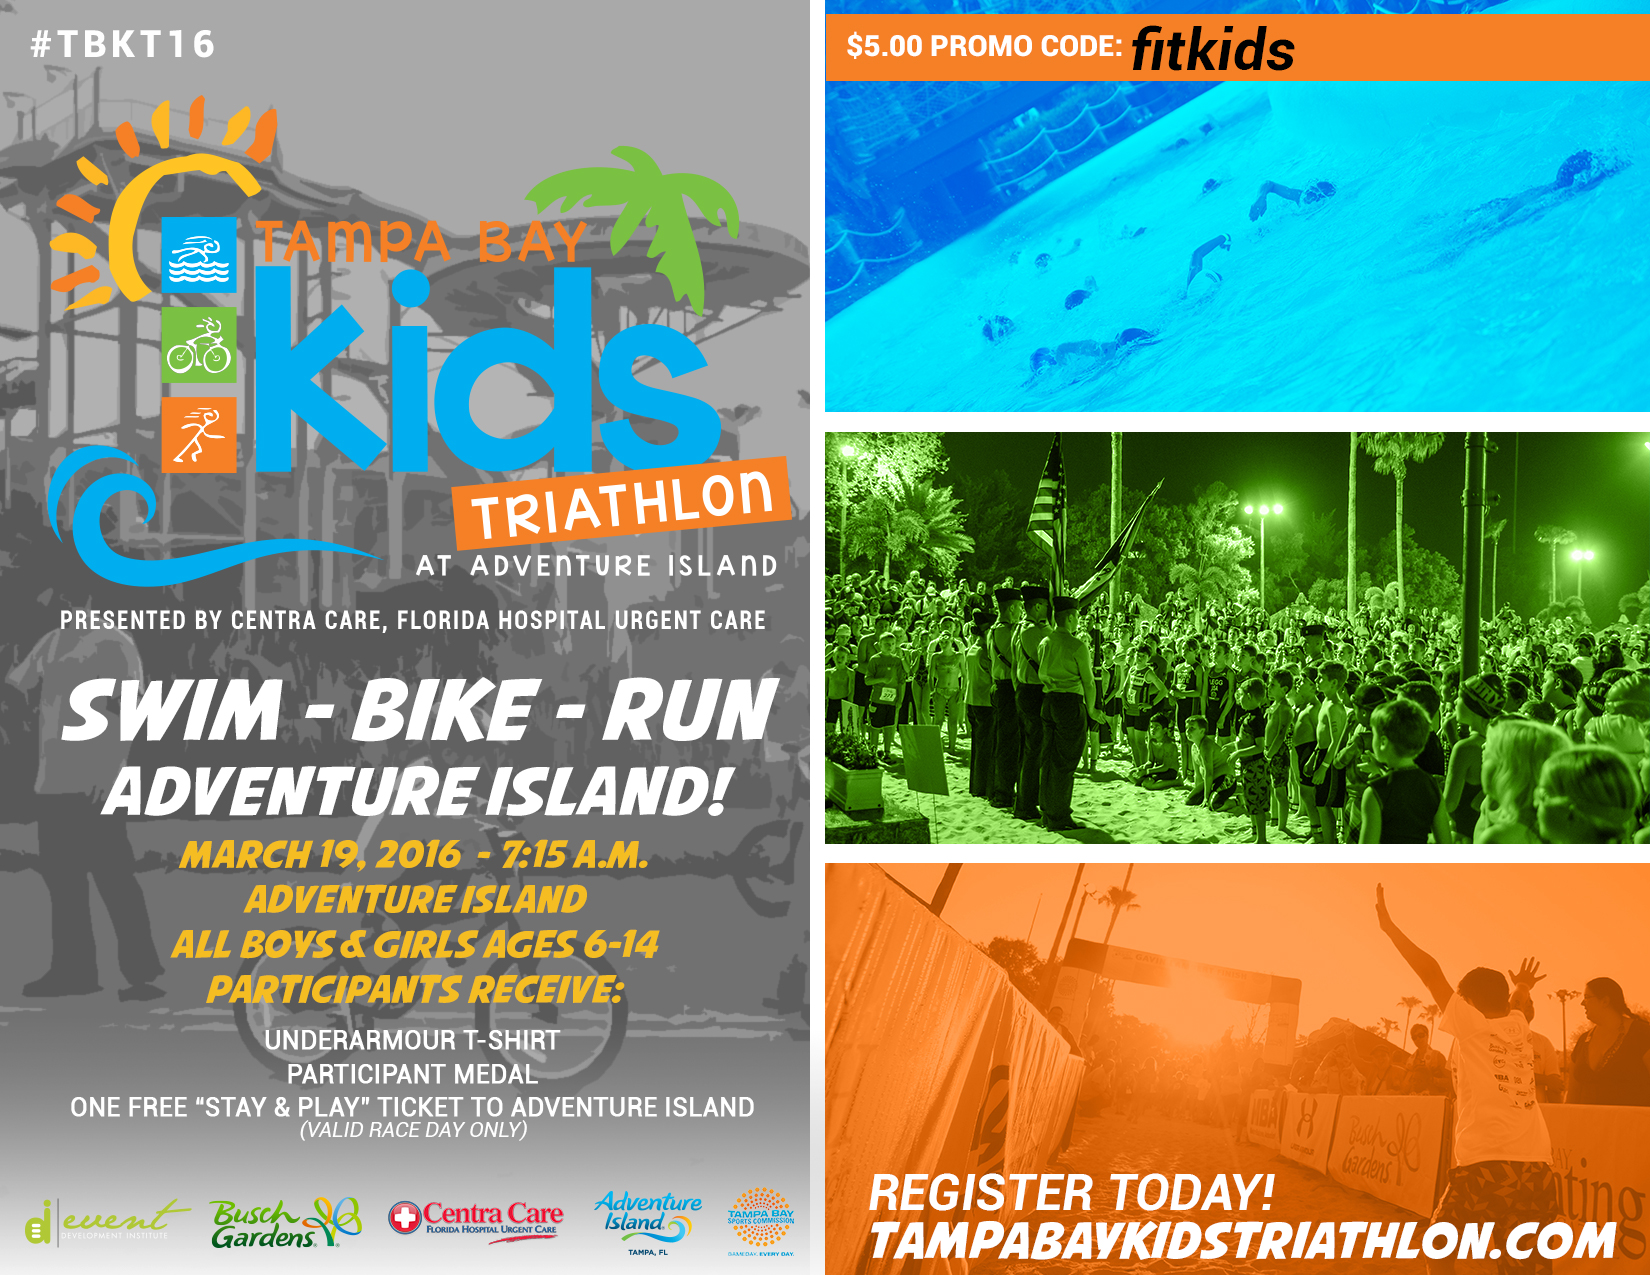 Tampa Bay Kids Triathlon Comes To Adventure Island! Discount Code!